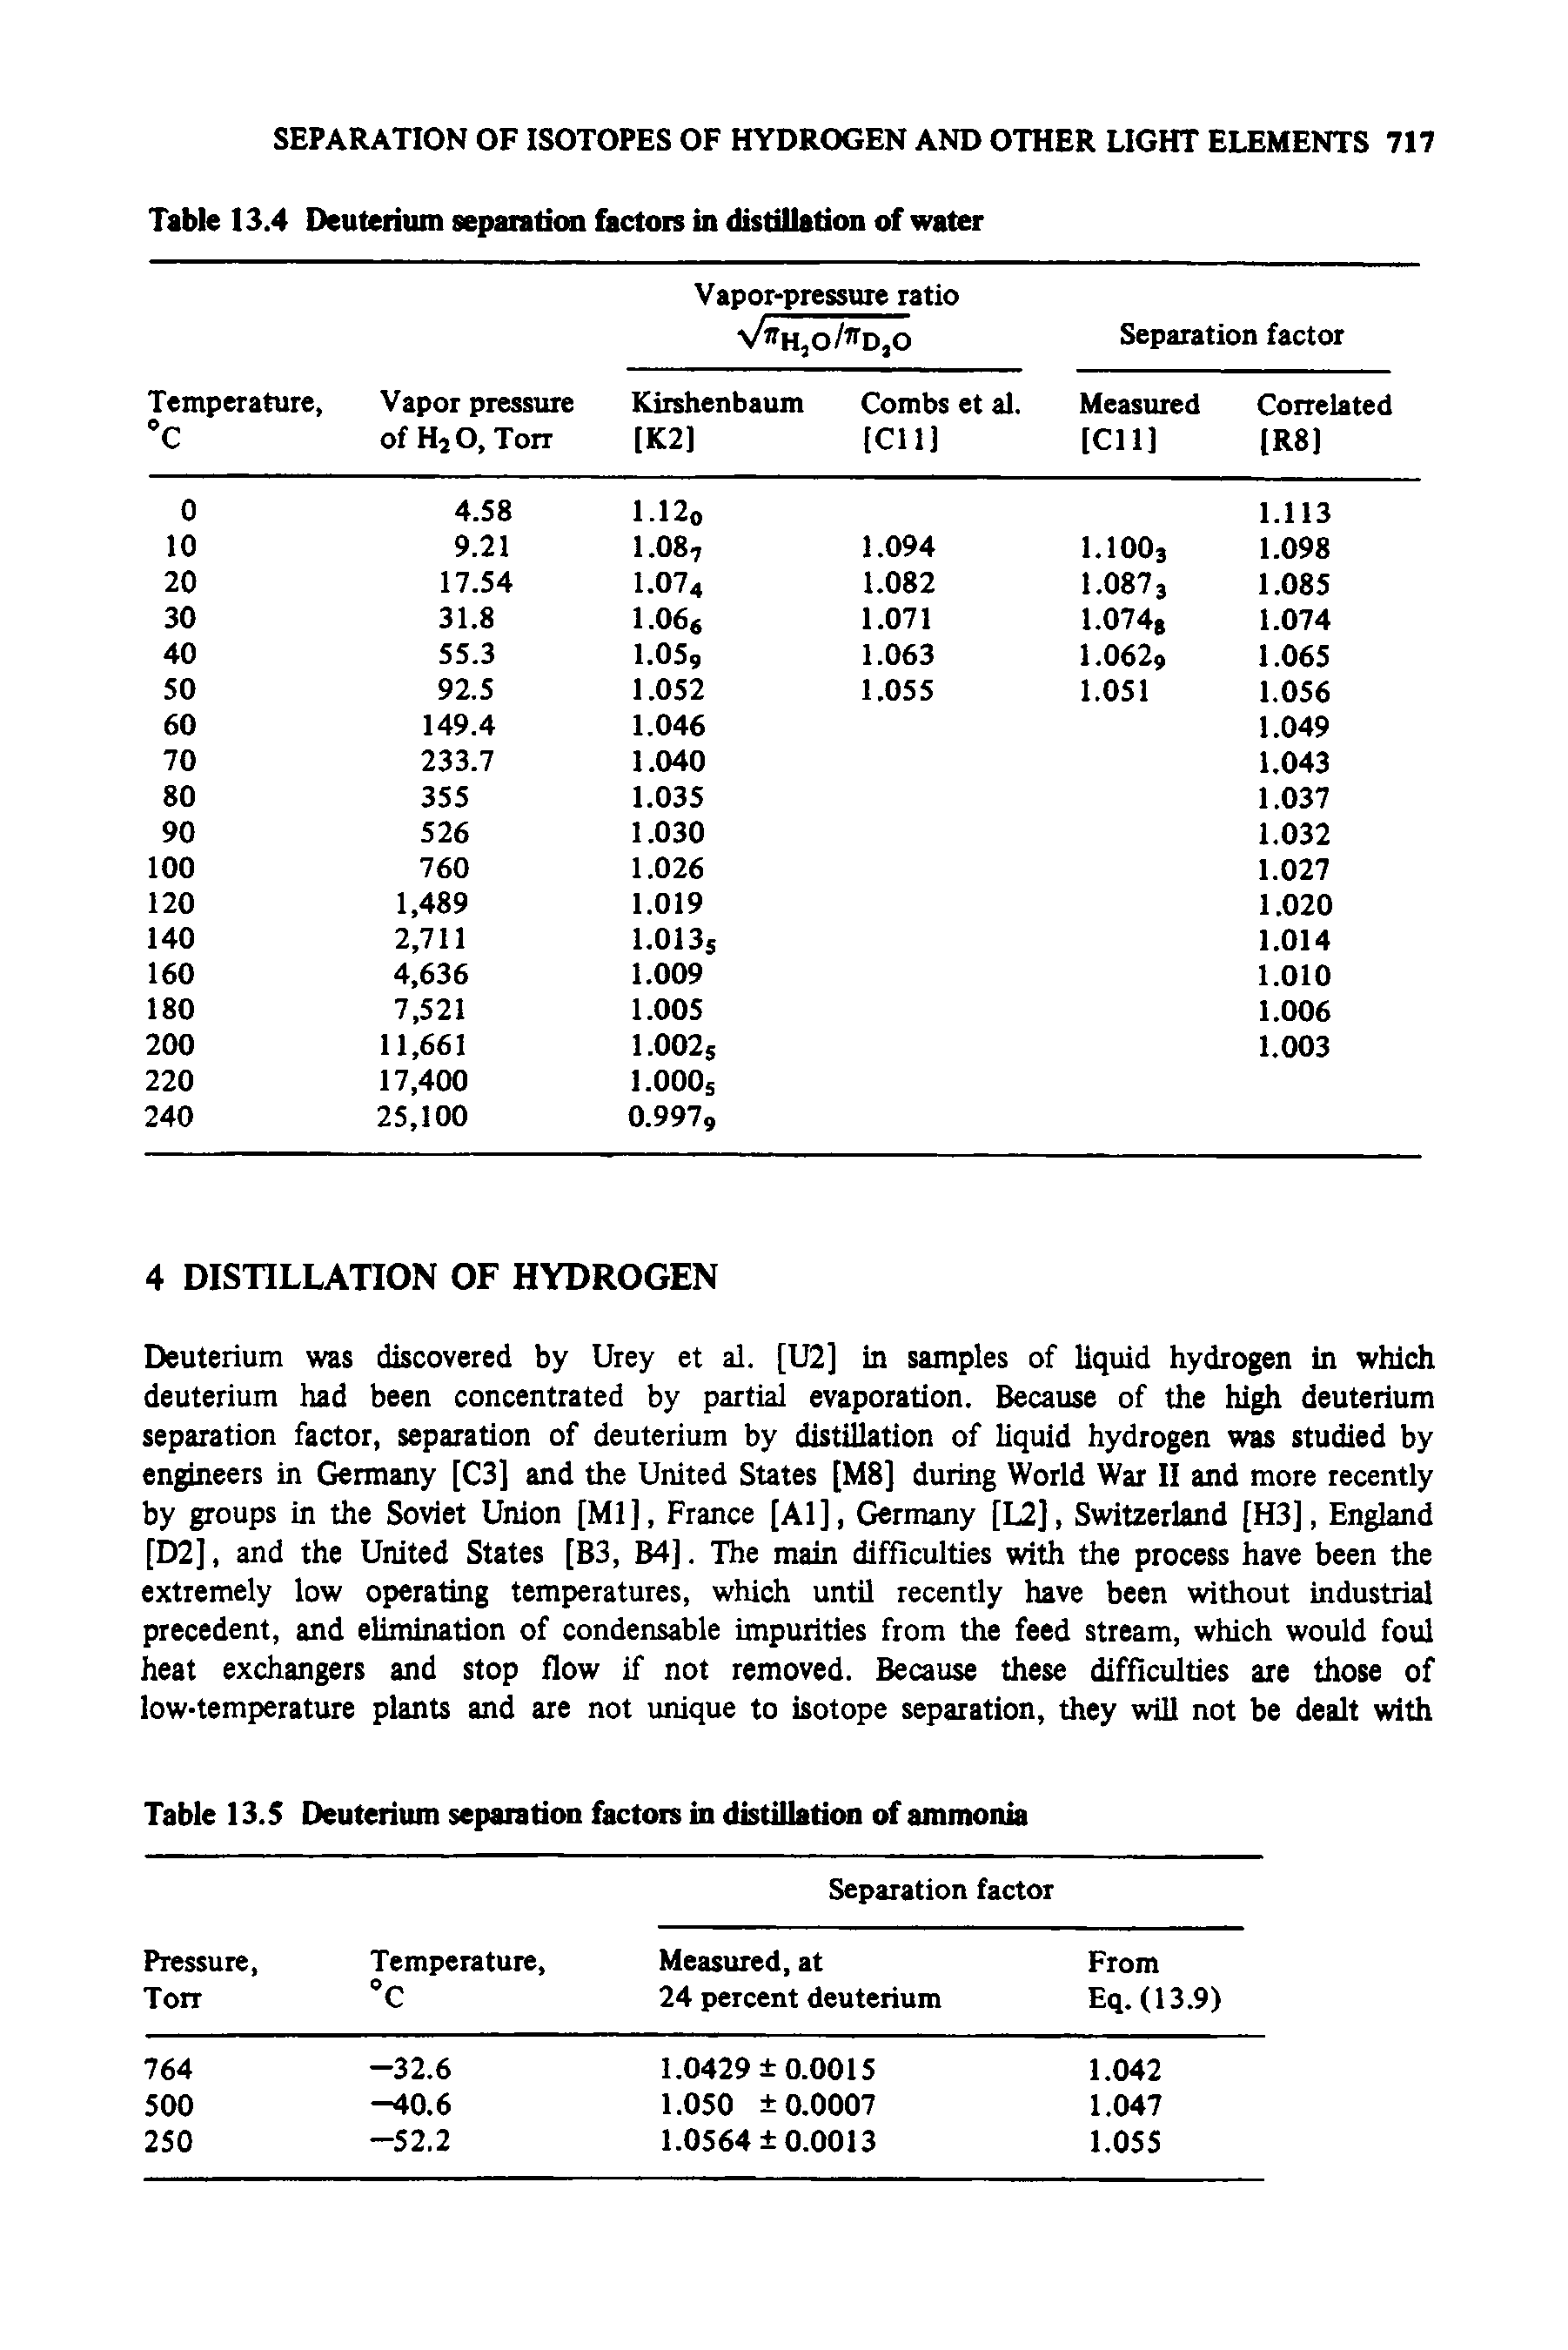 Table 13.5 Deuterium separation factois in distillation of ammonia...